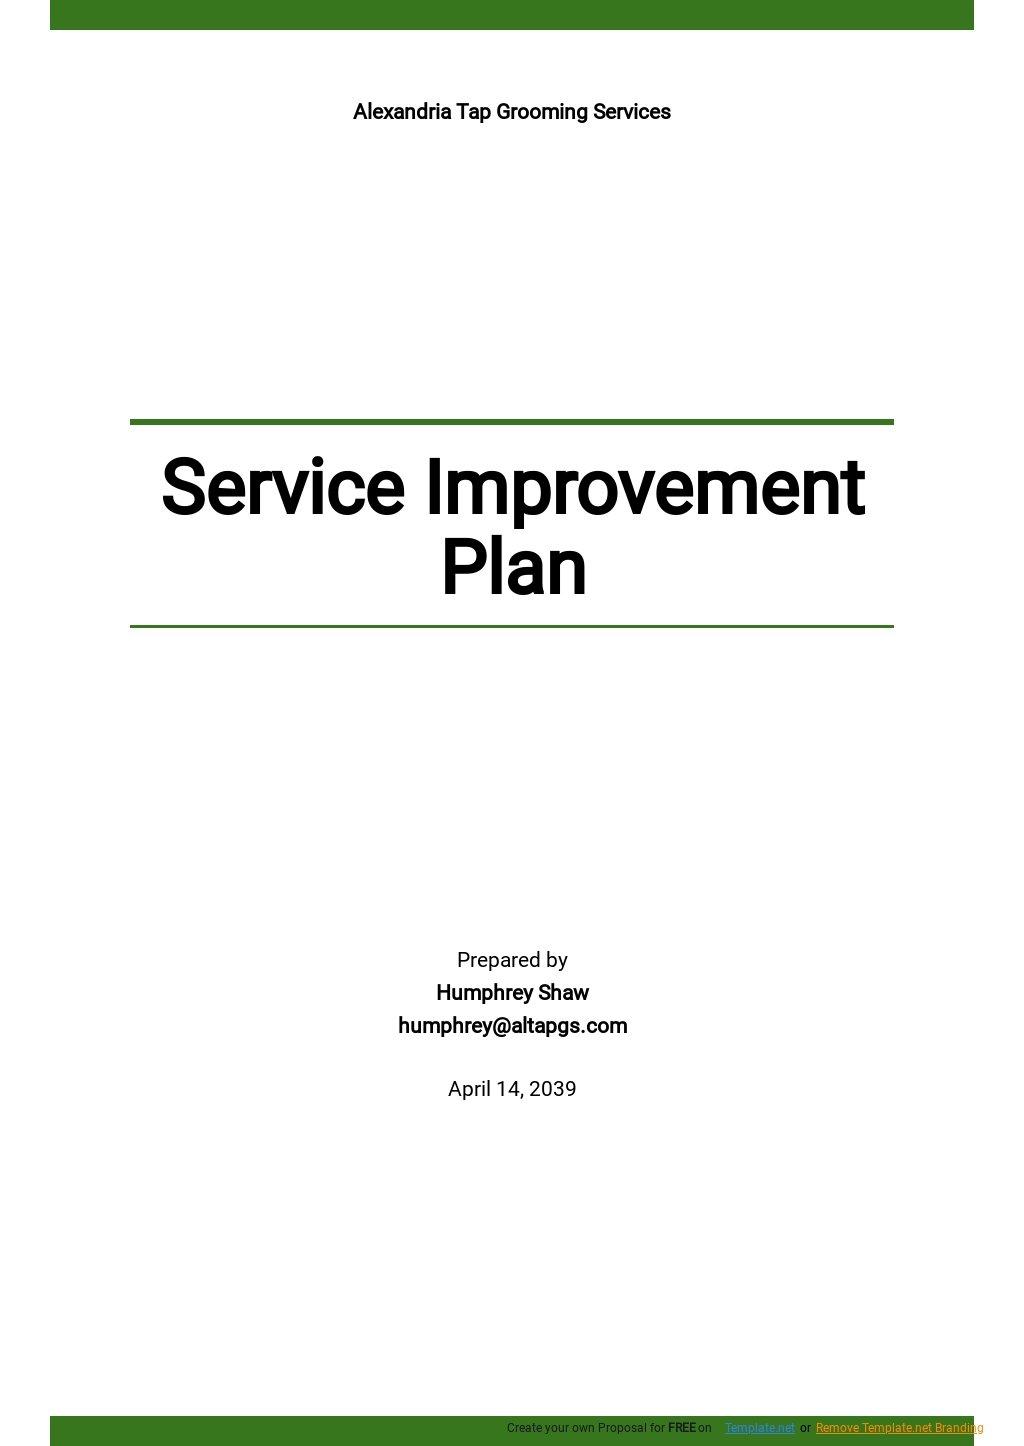 assignment on service improvement